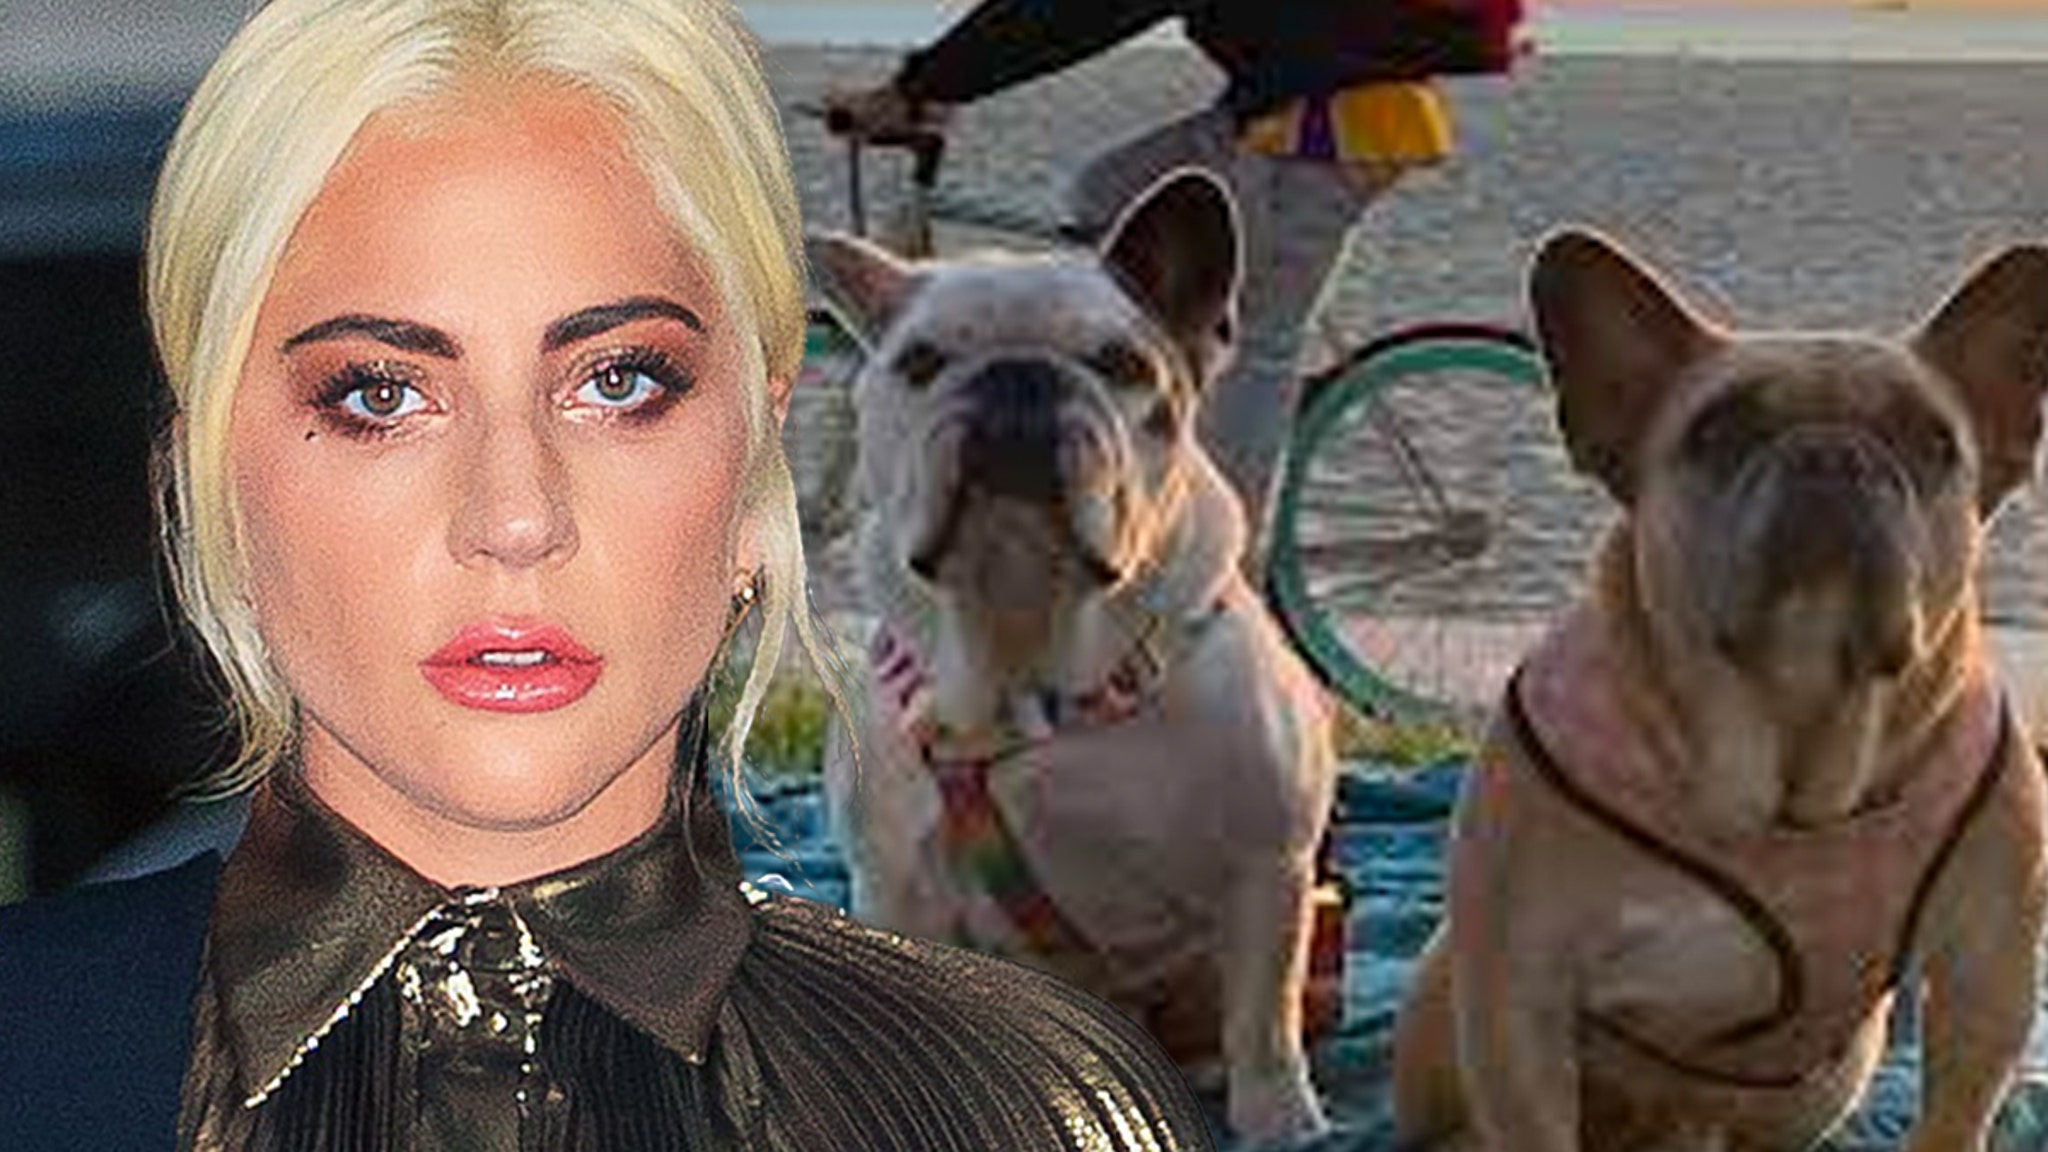 Lady Gaga Dog Walker Shooter Sentenced to 21 Years - TMZ